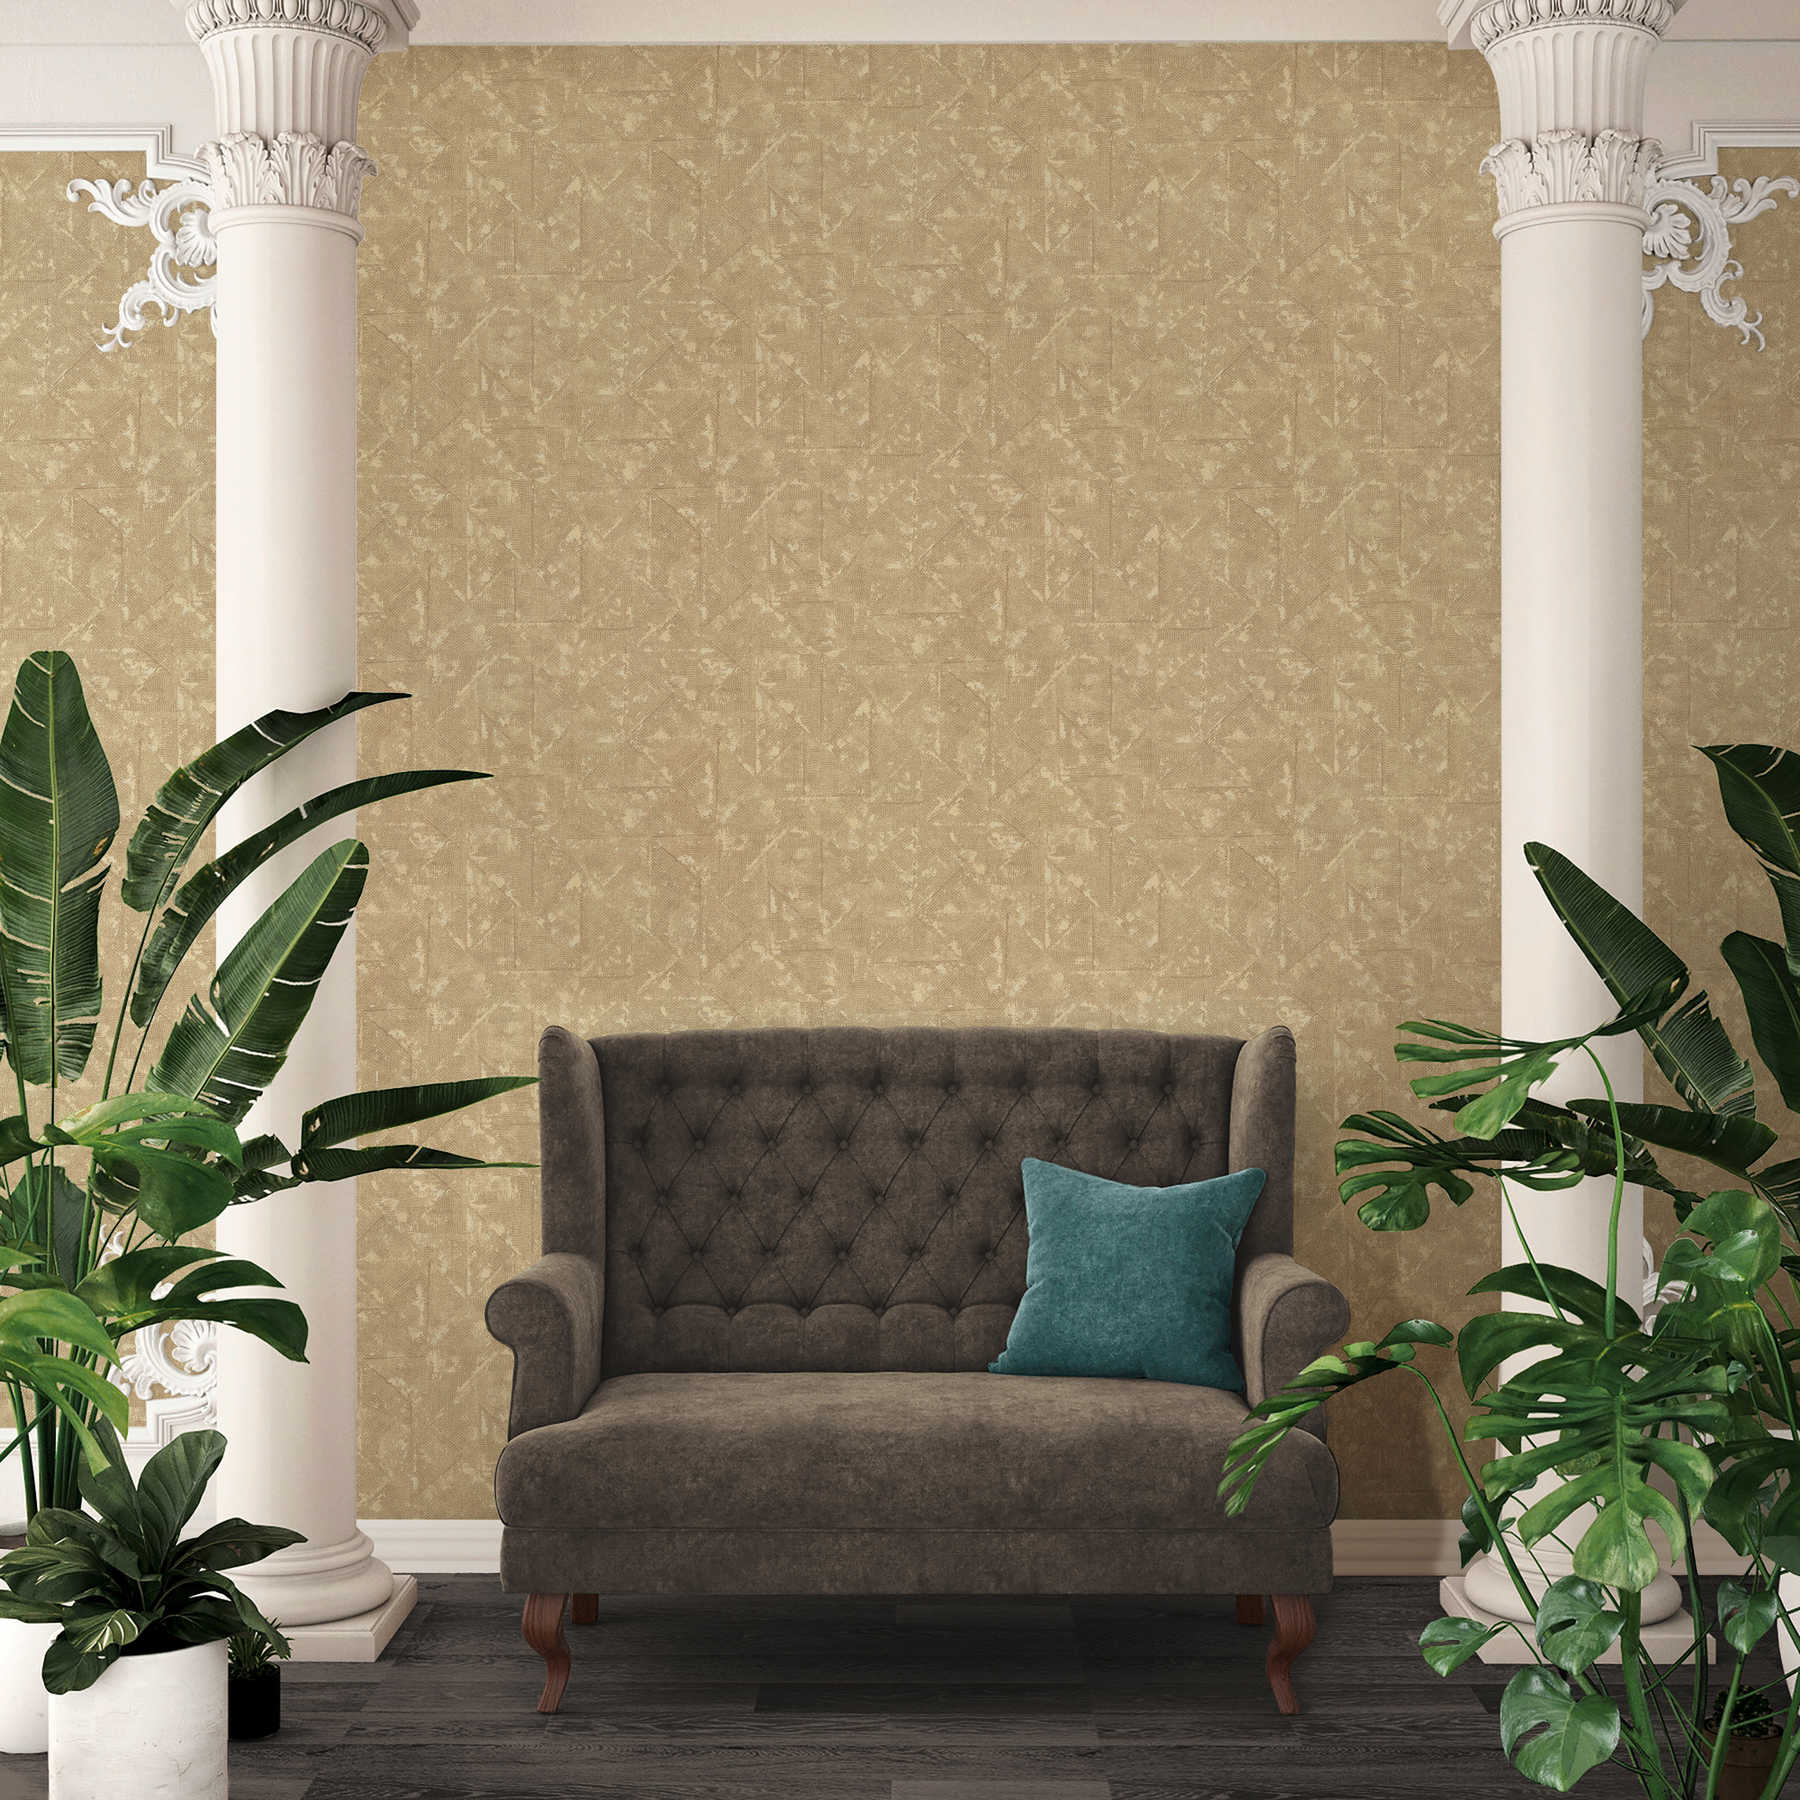             Plain non-woven wallpaper with asymmetrical details - beige, brown, gold
        